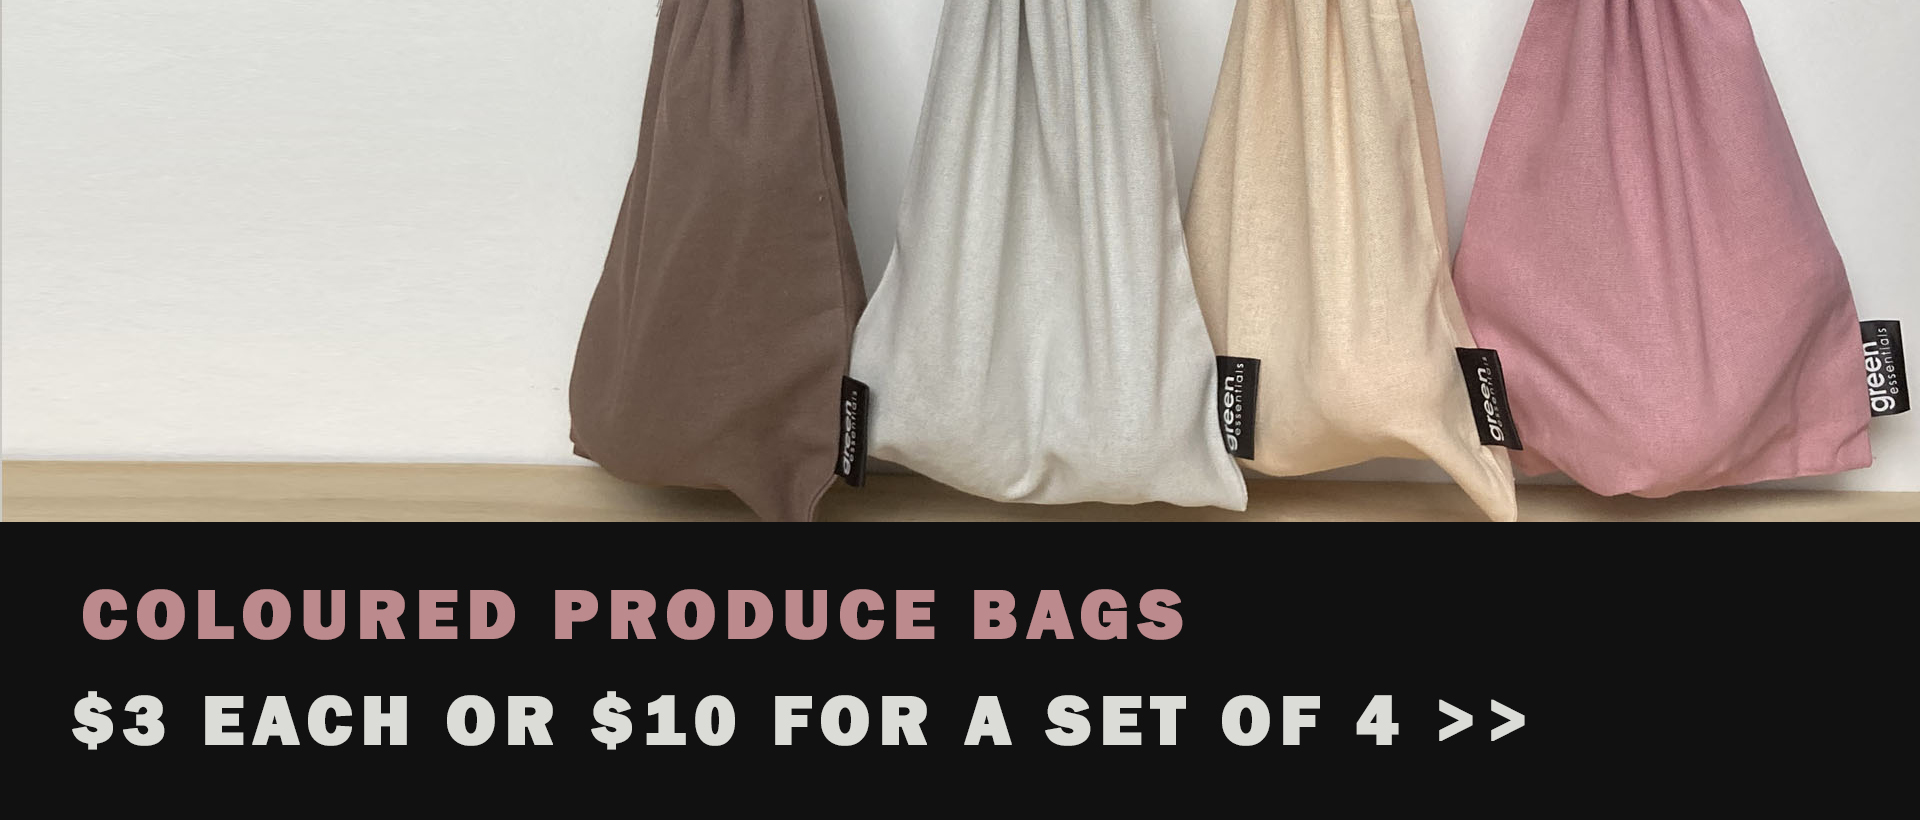 produce bags SALE